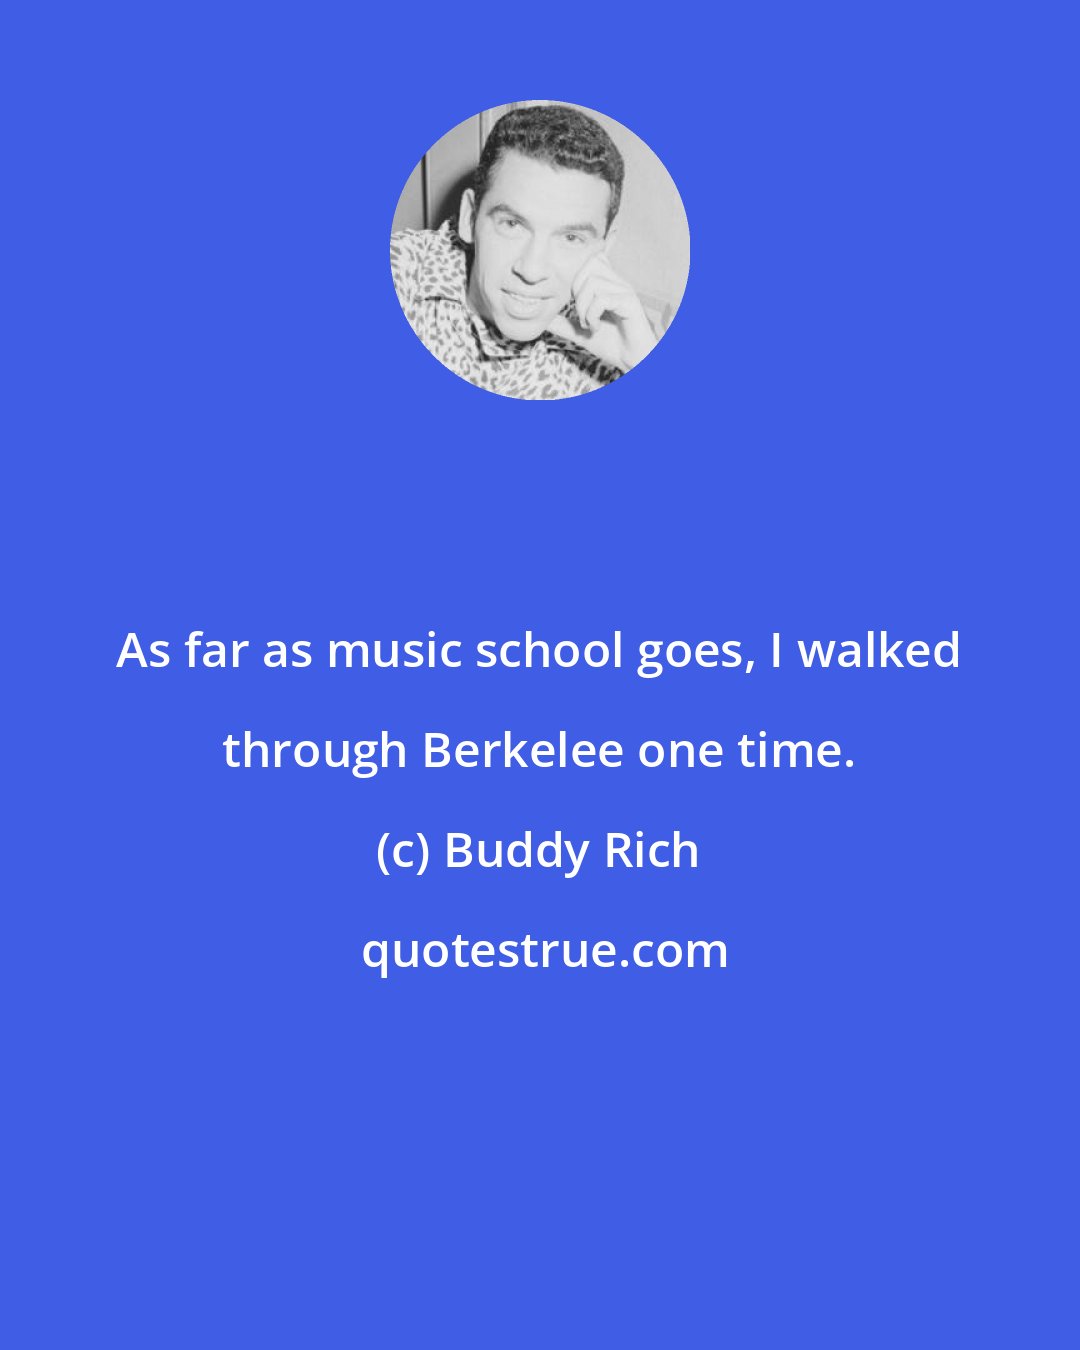 Buddy Rich: As far as music school goes, I walked through Berkelee one time.